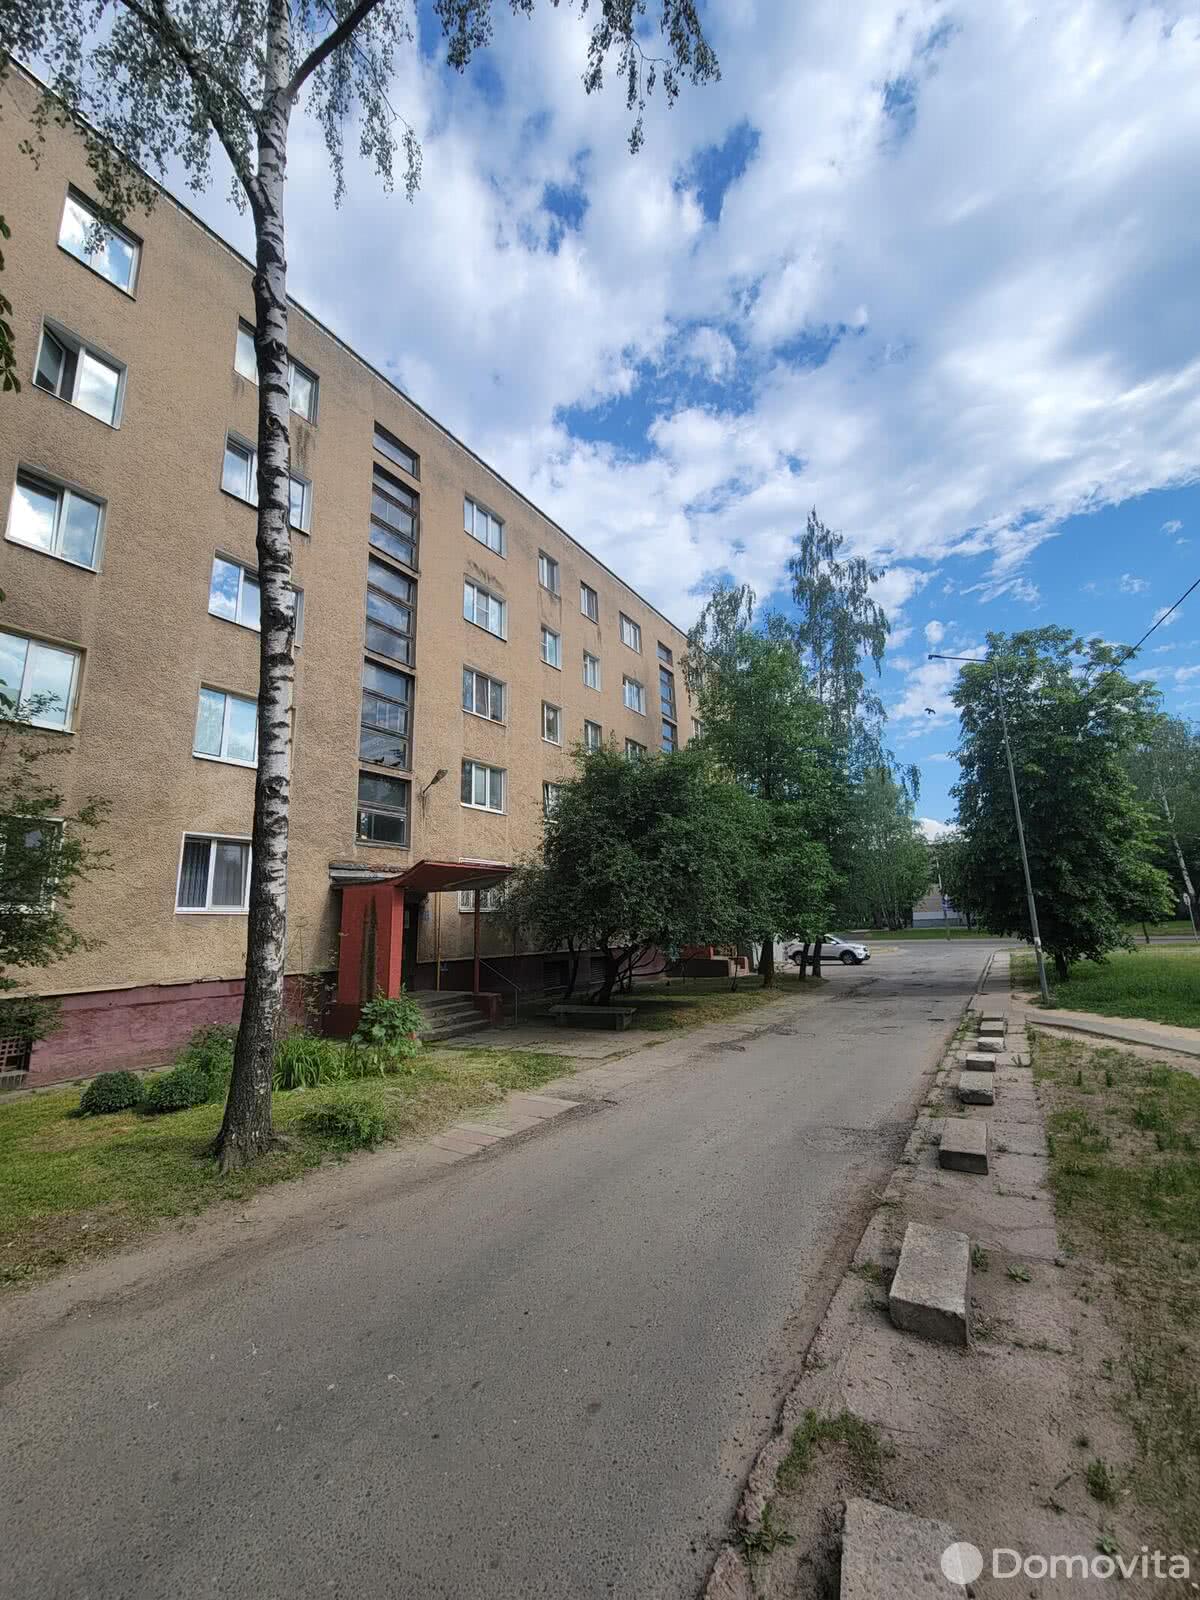 Цена продажи квартиры, Могилев, ул. Симонова, д. 9